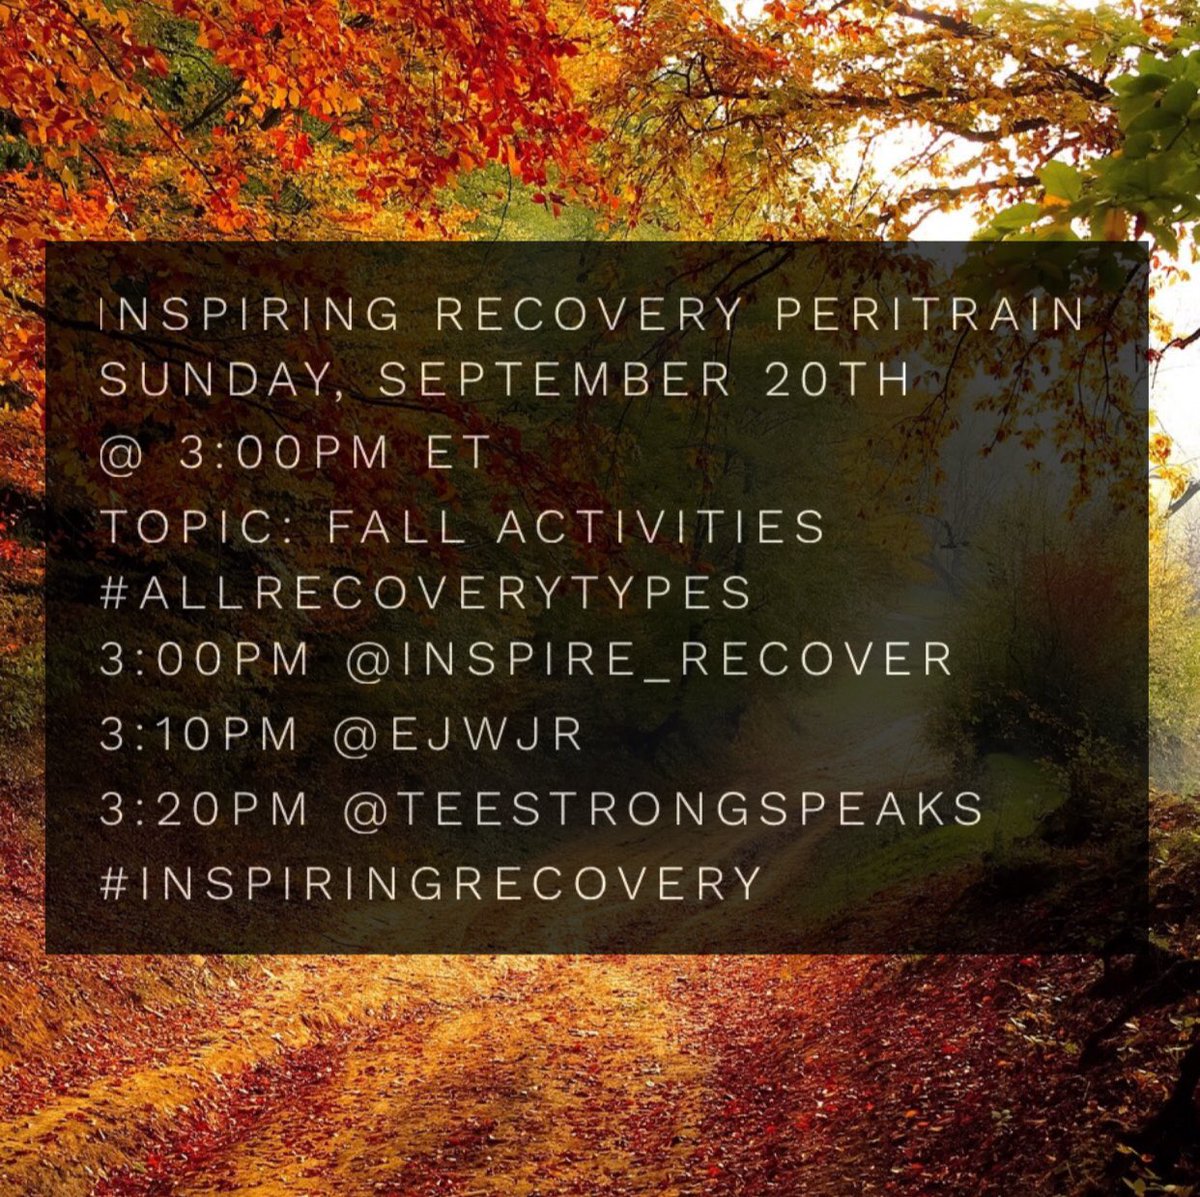 #recovery #periscope #inspiringrecovery #healing #allrecoverytypes